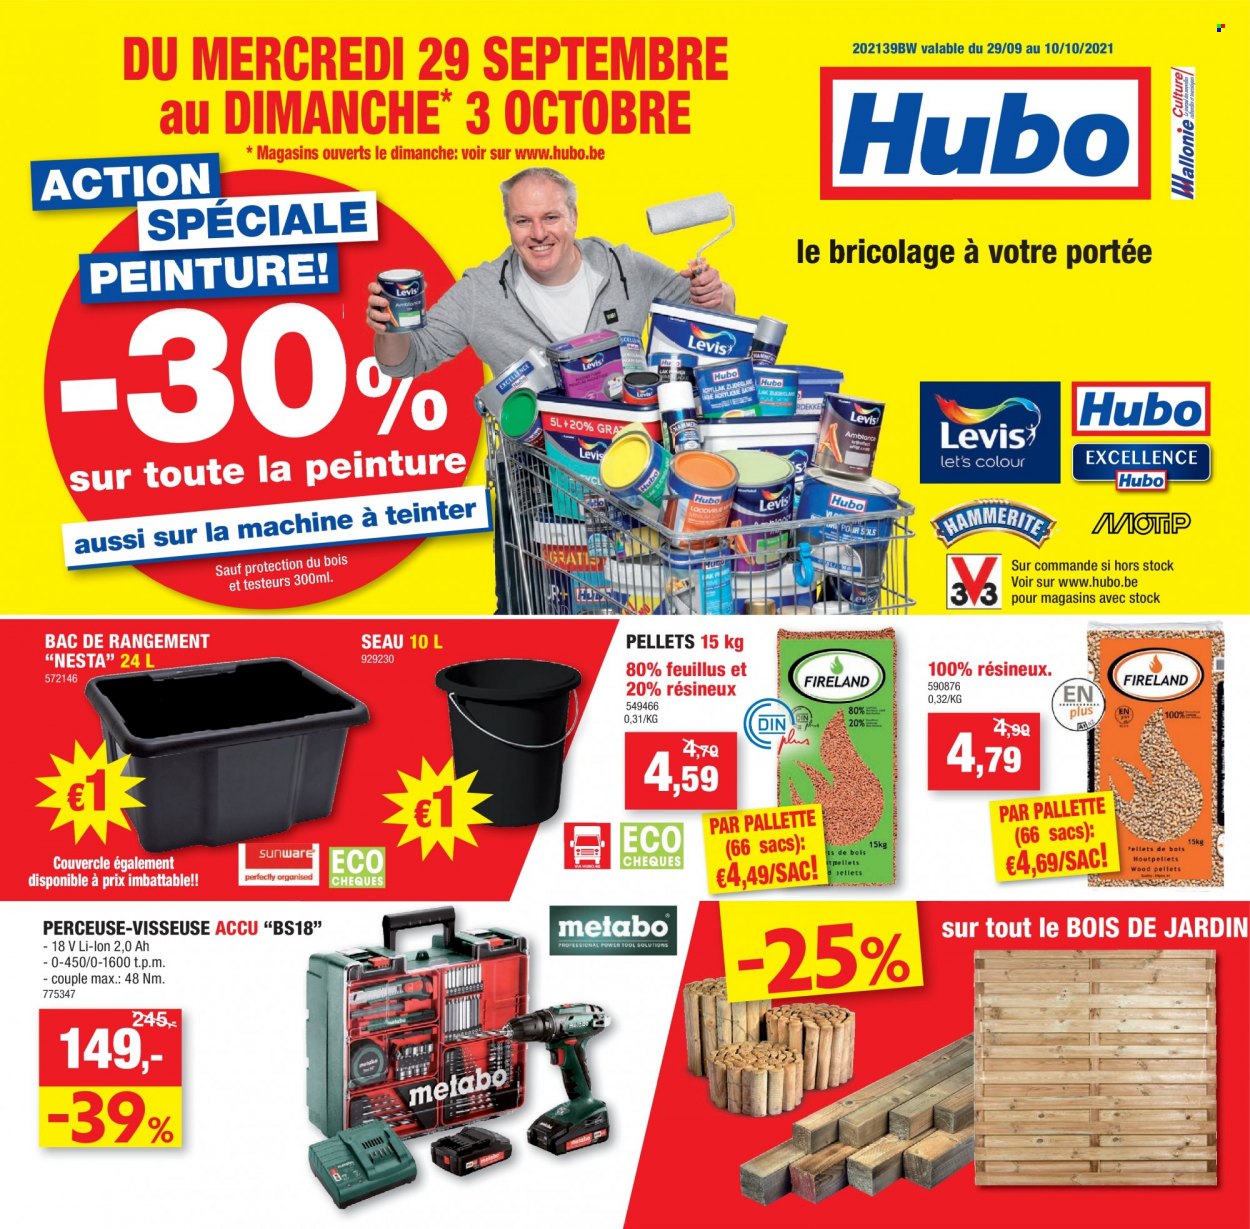 thumbnail - Catalogue Hubo - 29/09/2021 - 10/10/2021 - Produits soldés - perceuse, visseuse, sac. Page 1.